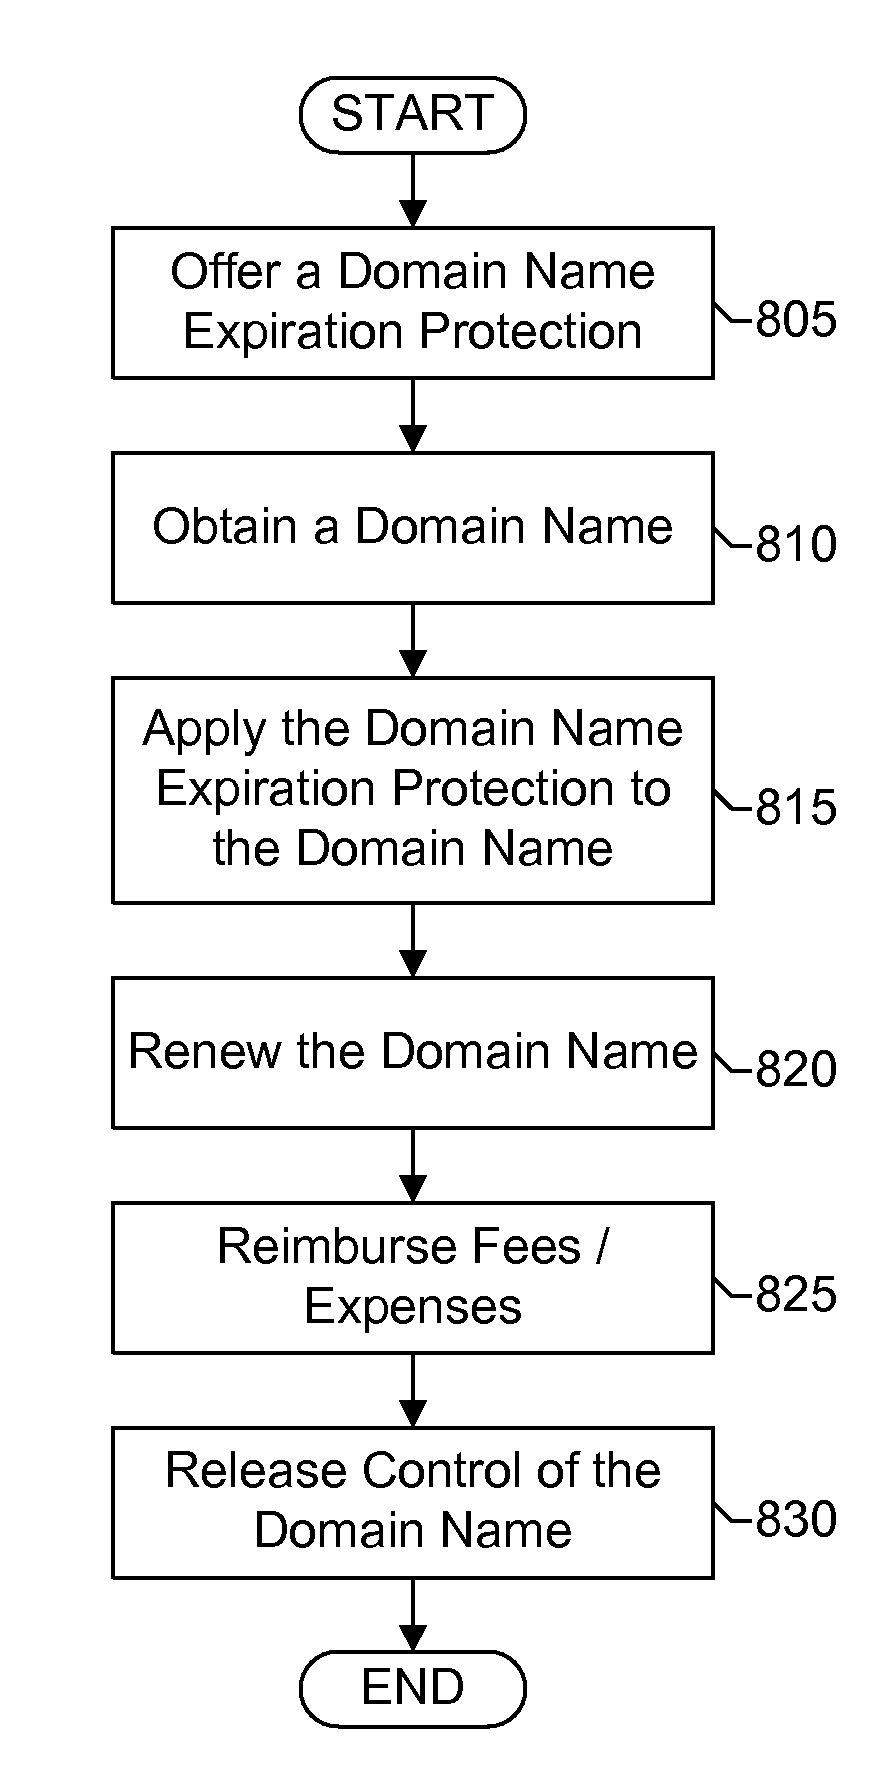 Domain name expiration protection